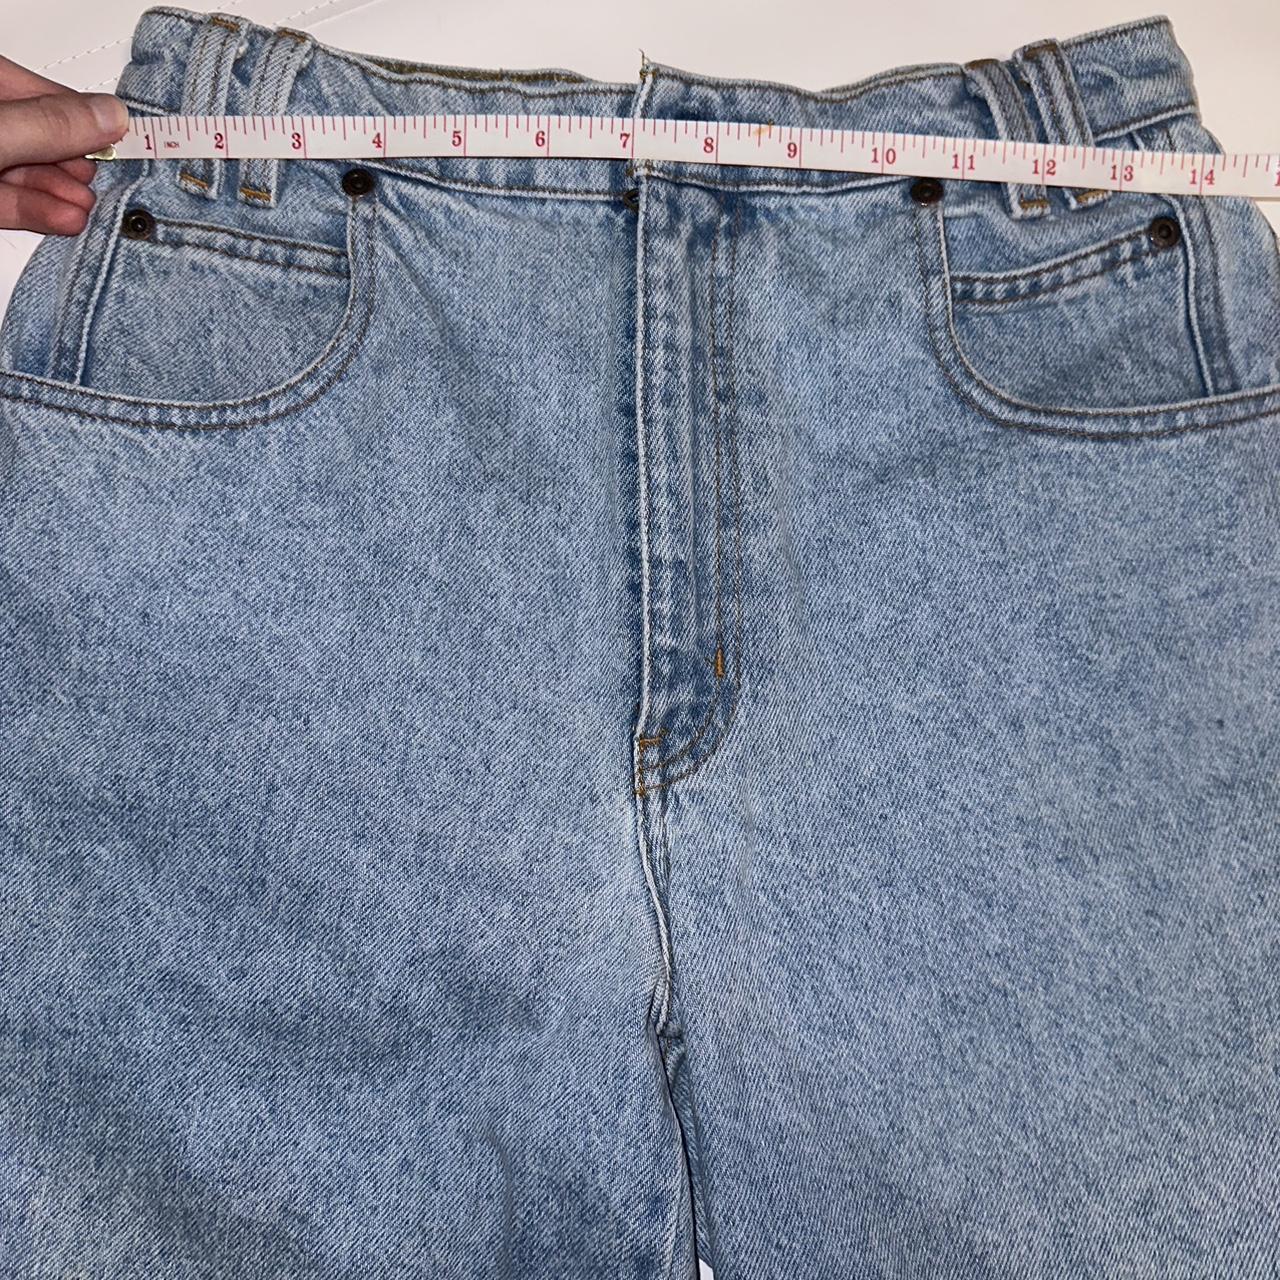 28” Sonoma jean shorts In seam:... - Depop